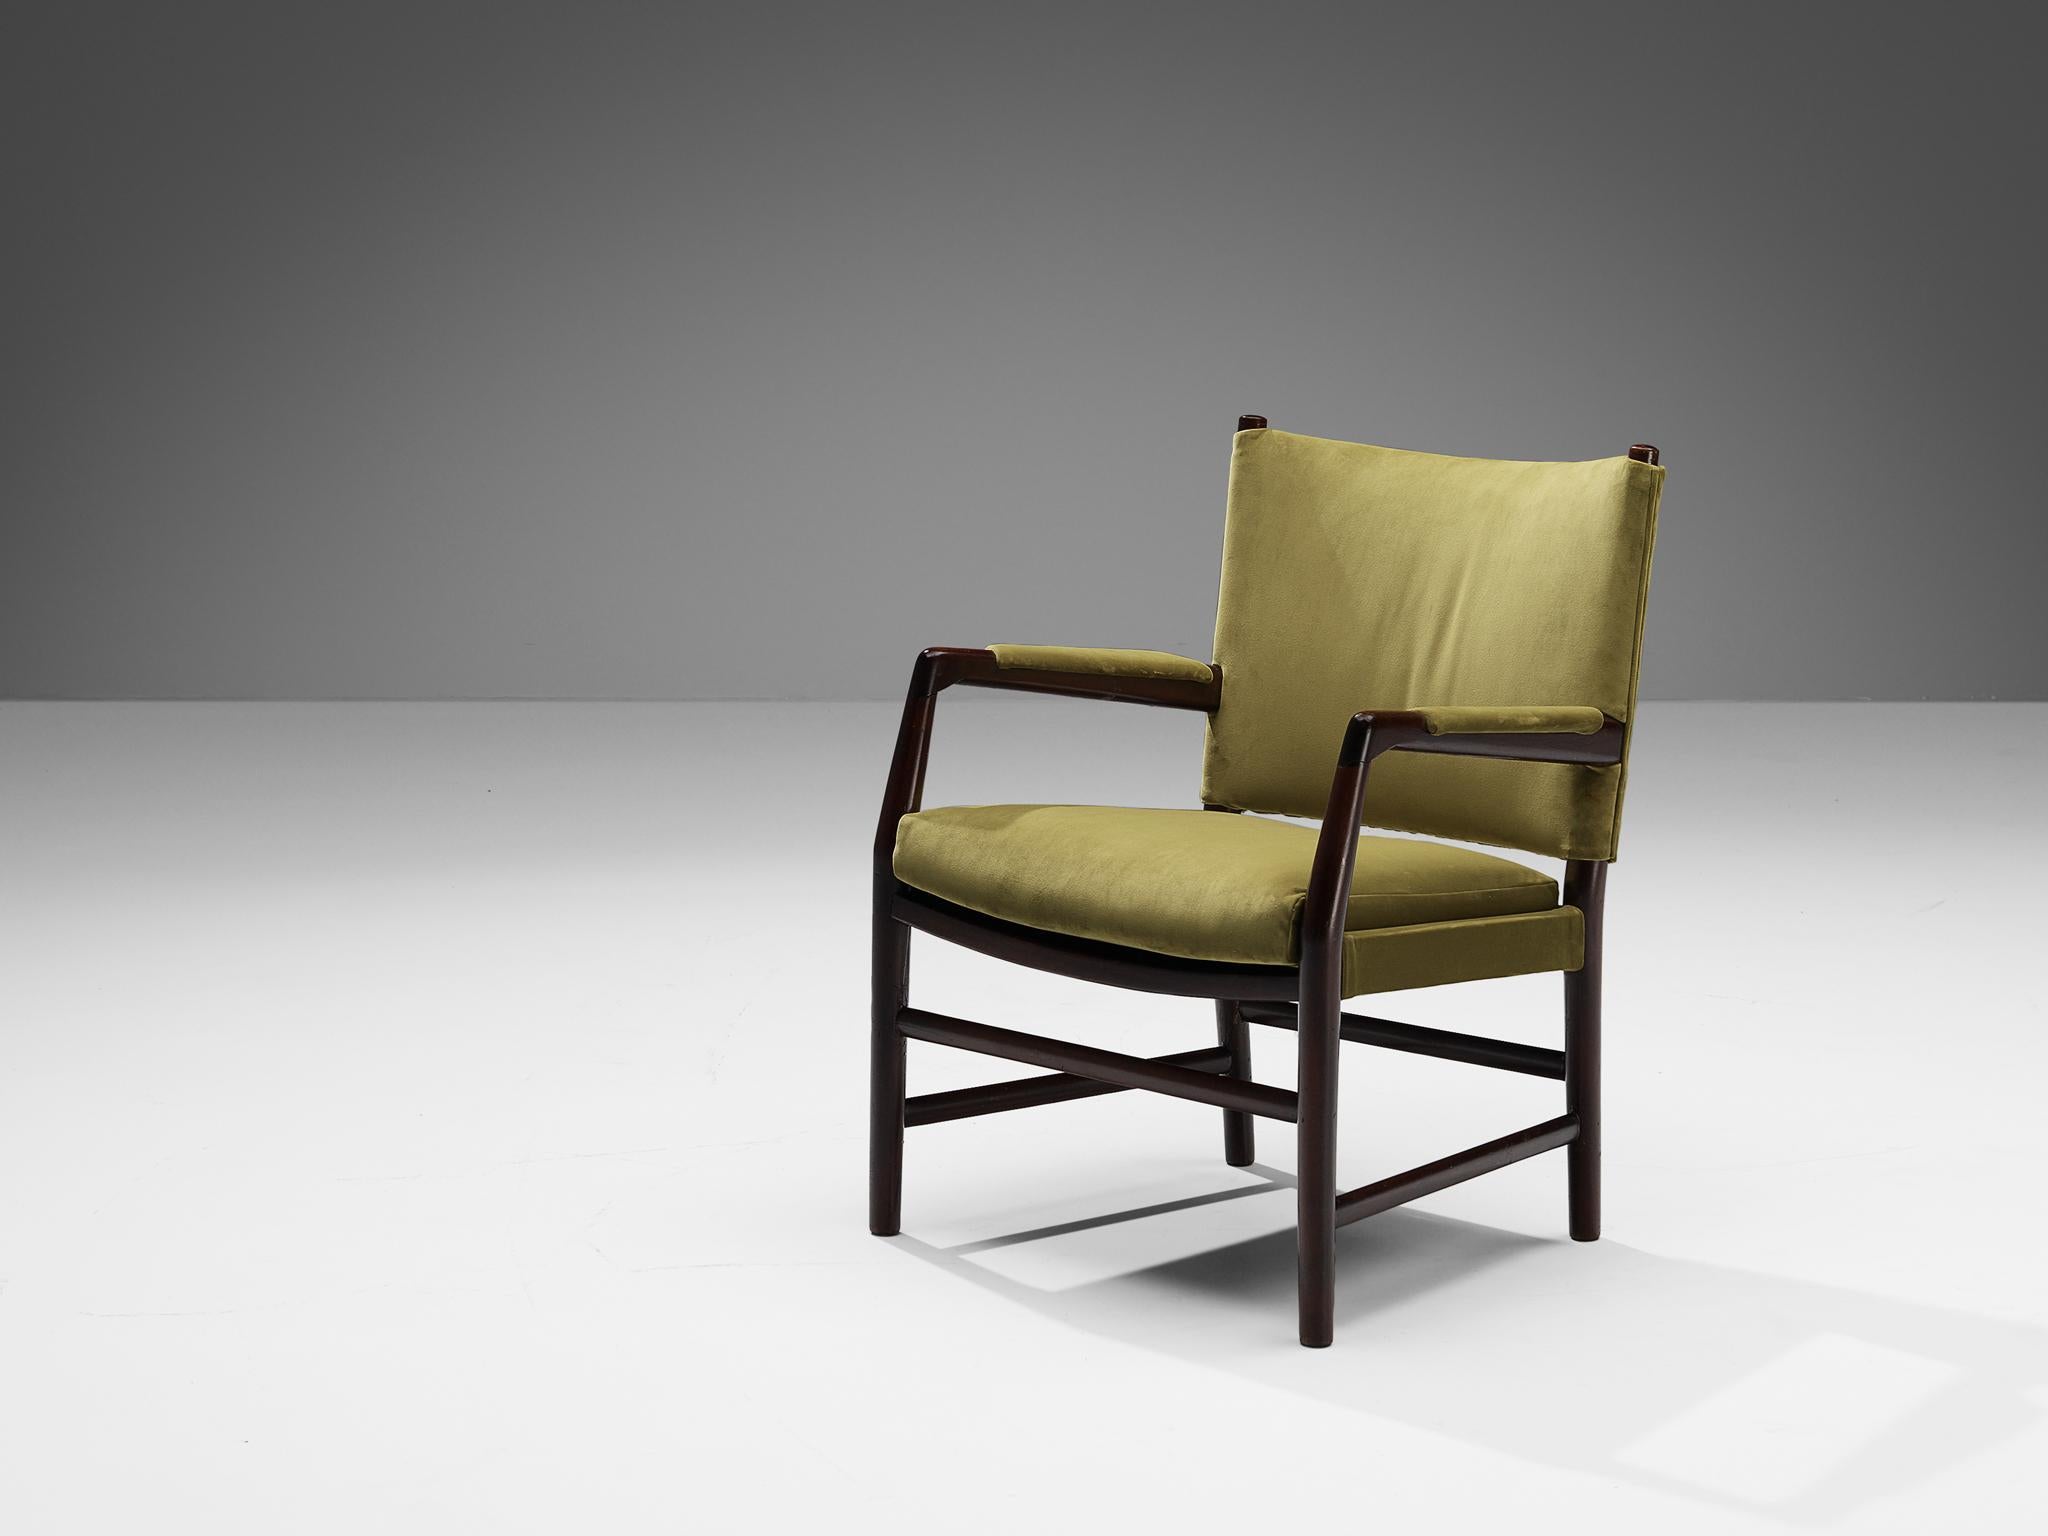 Hans J. Wegner for Plan Møbler, 'Conference' armchair, model 'B123', teak, velvet, Denmark, design 1940

The easy chair 'B123' was designed by Hans J. Wegner during the period that he worked in the Jacobsen Office. In his second year at school,